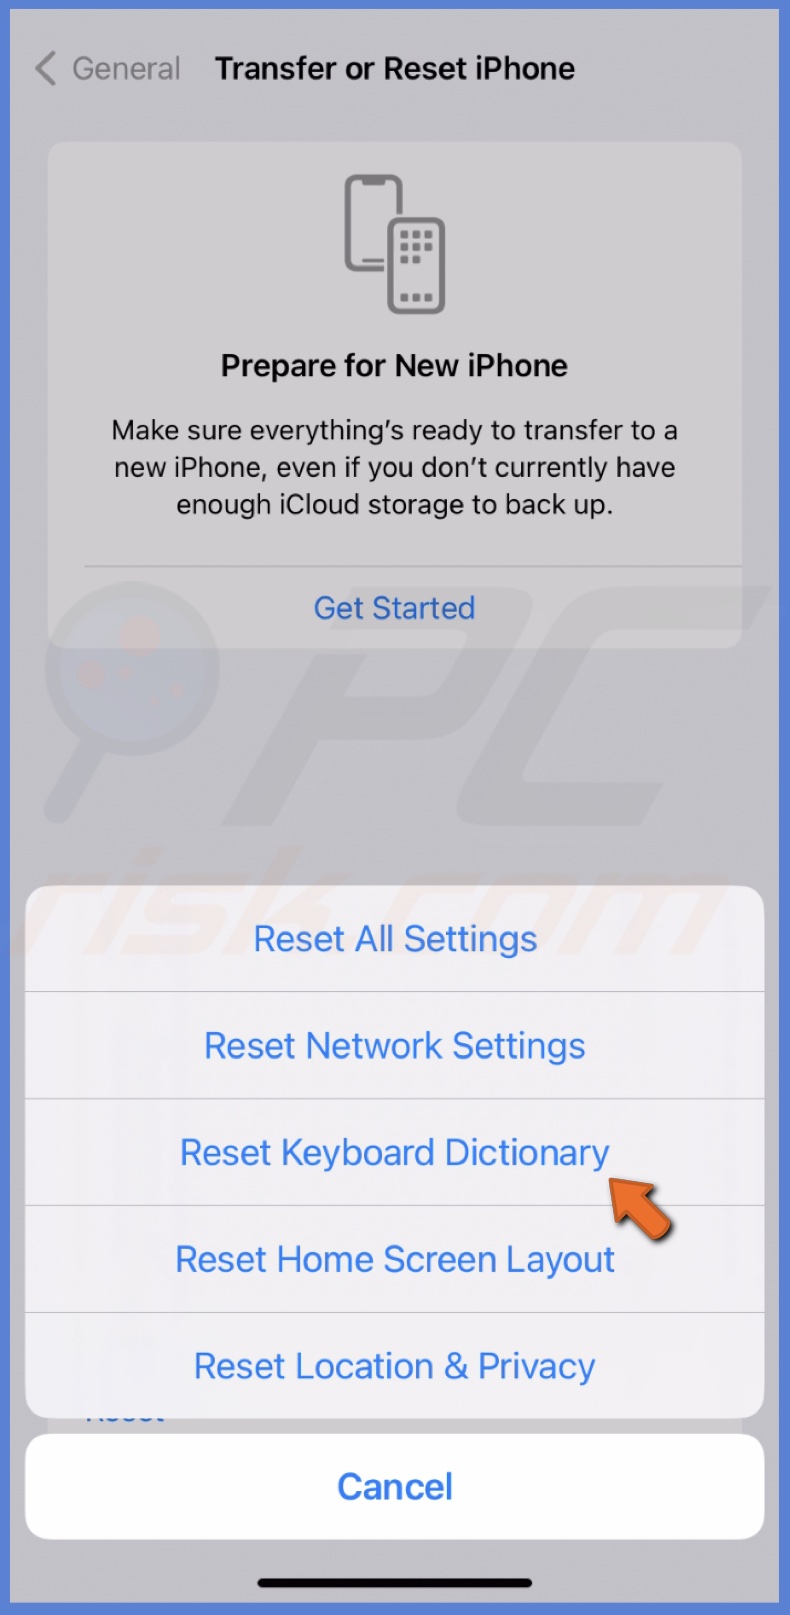 Reset Keyboard Dictionary